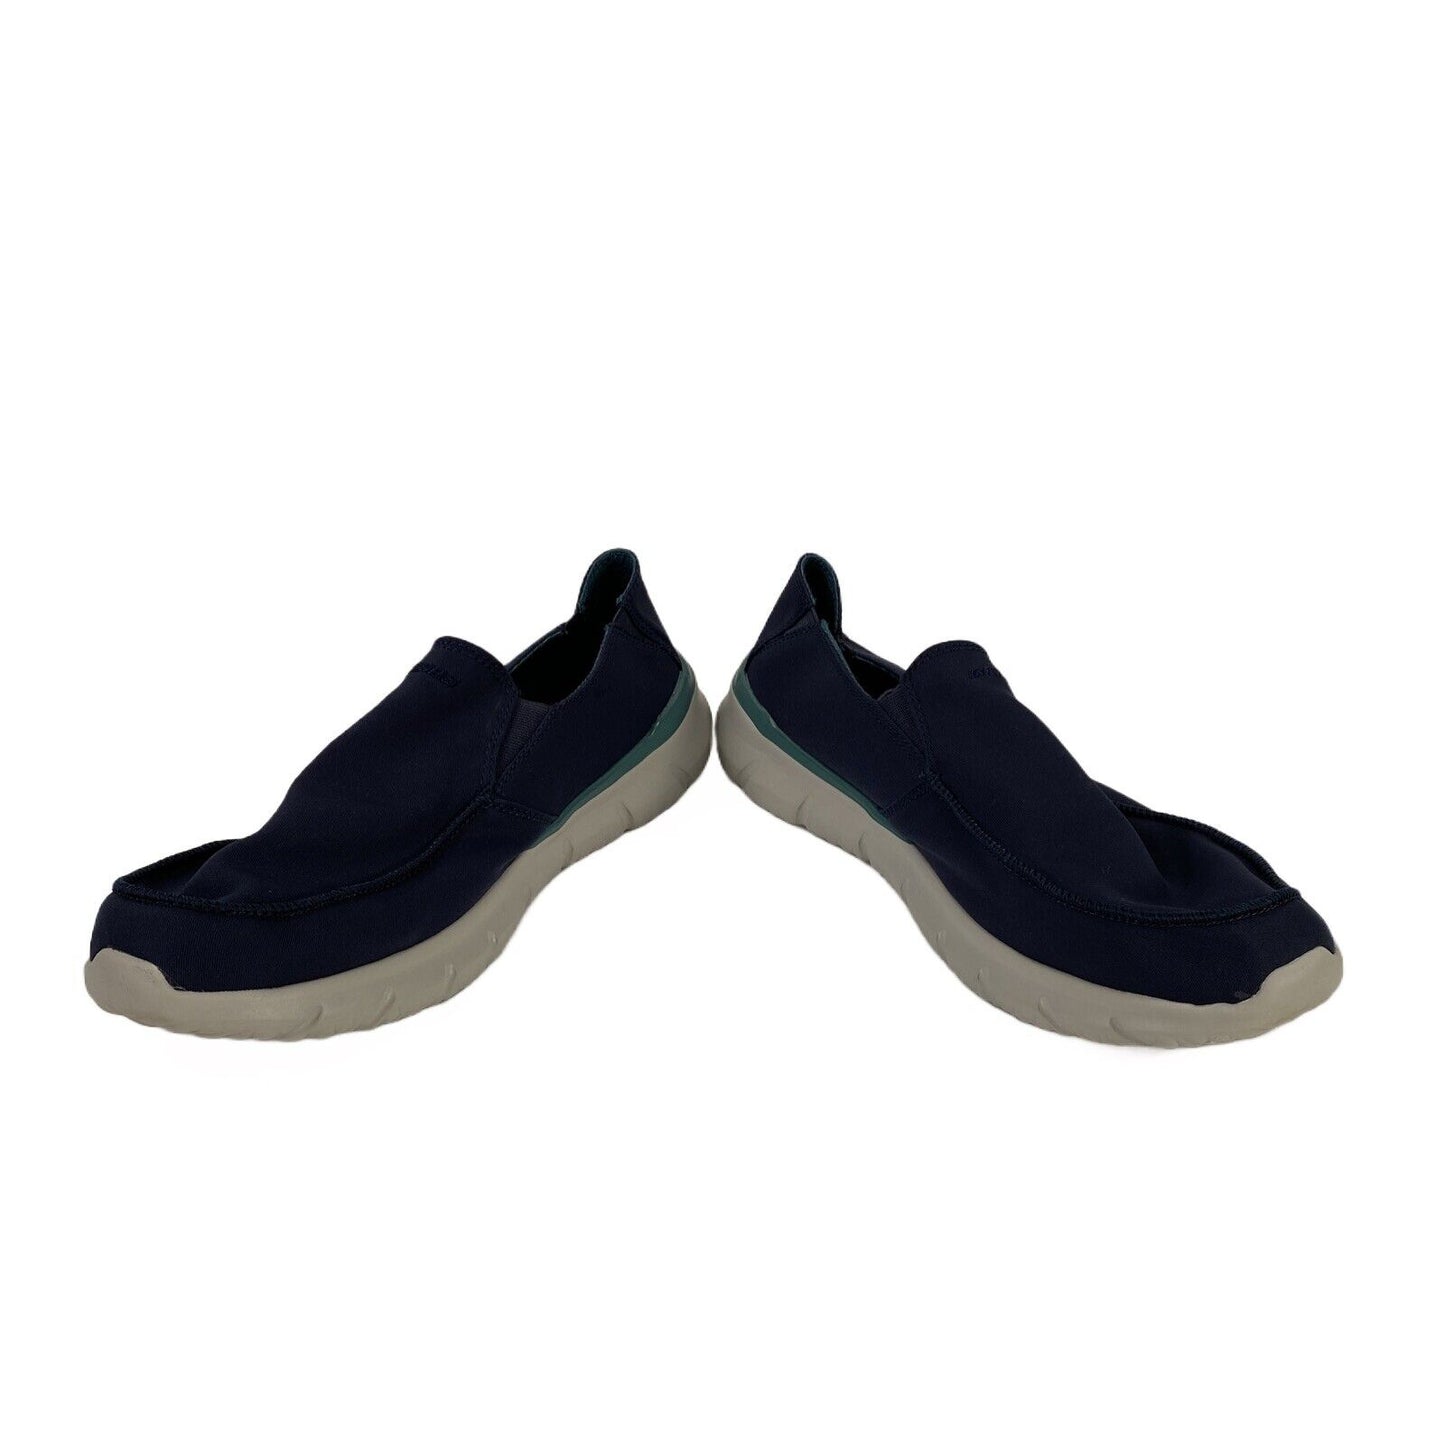 Skechers Men's Navy Blue Del Retto Alvert Air Cooled Loafers 210399 - 12